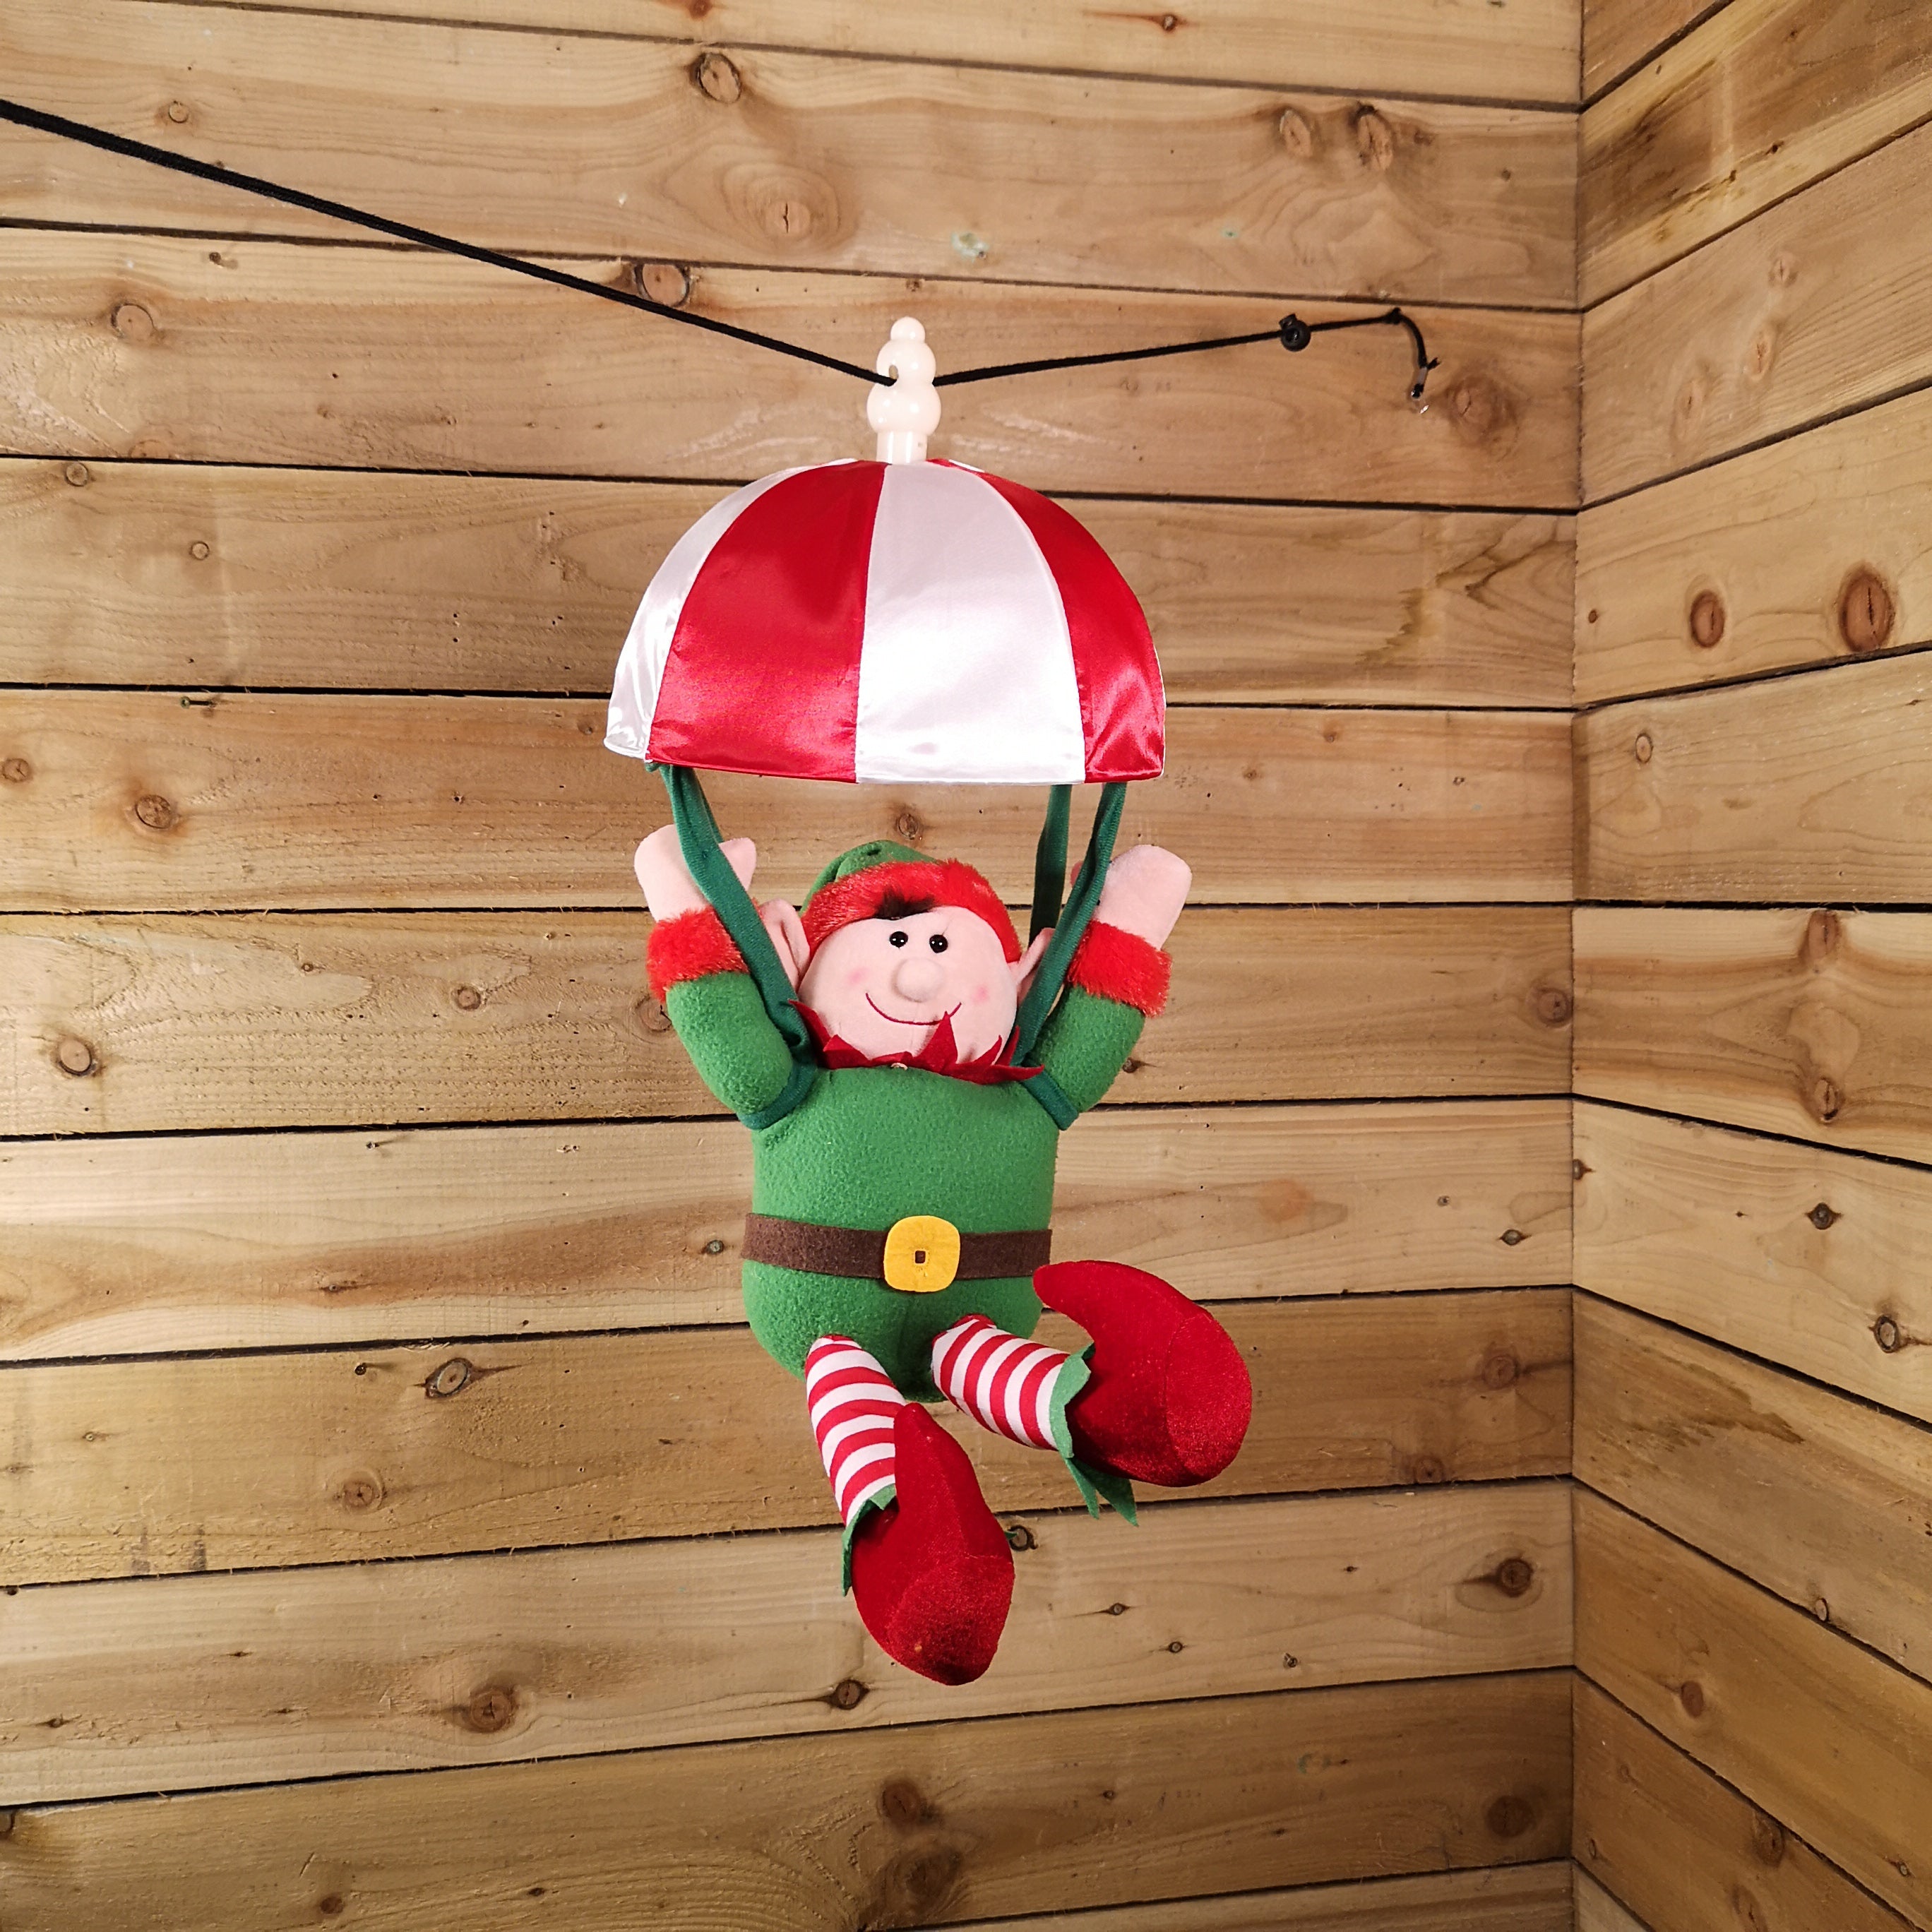 Premier Christmas Animated & Musical Kicking Leg Parachuting Elf